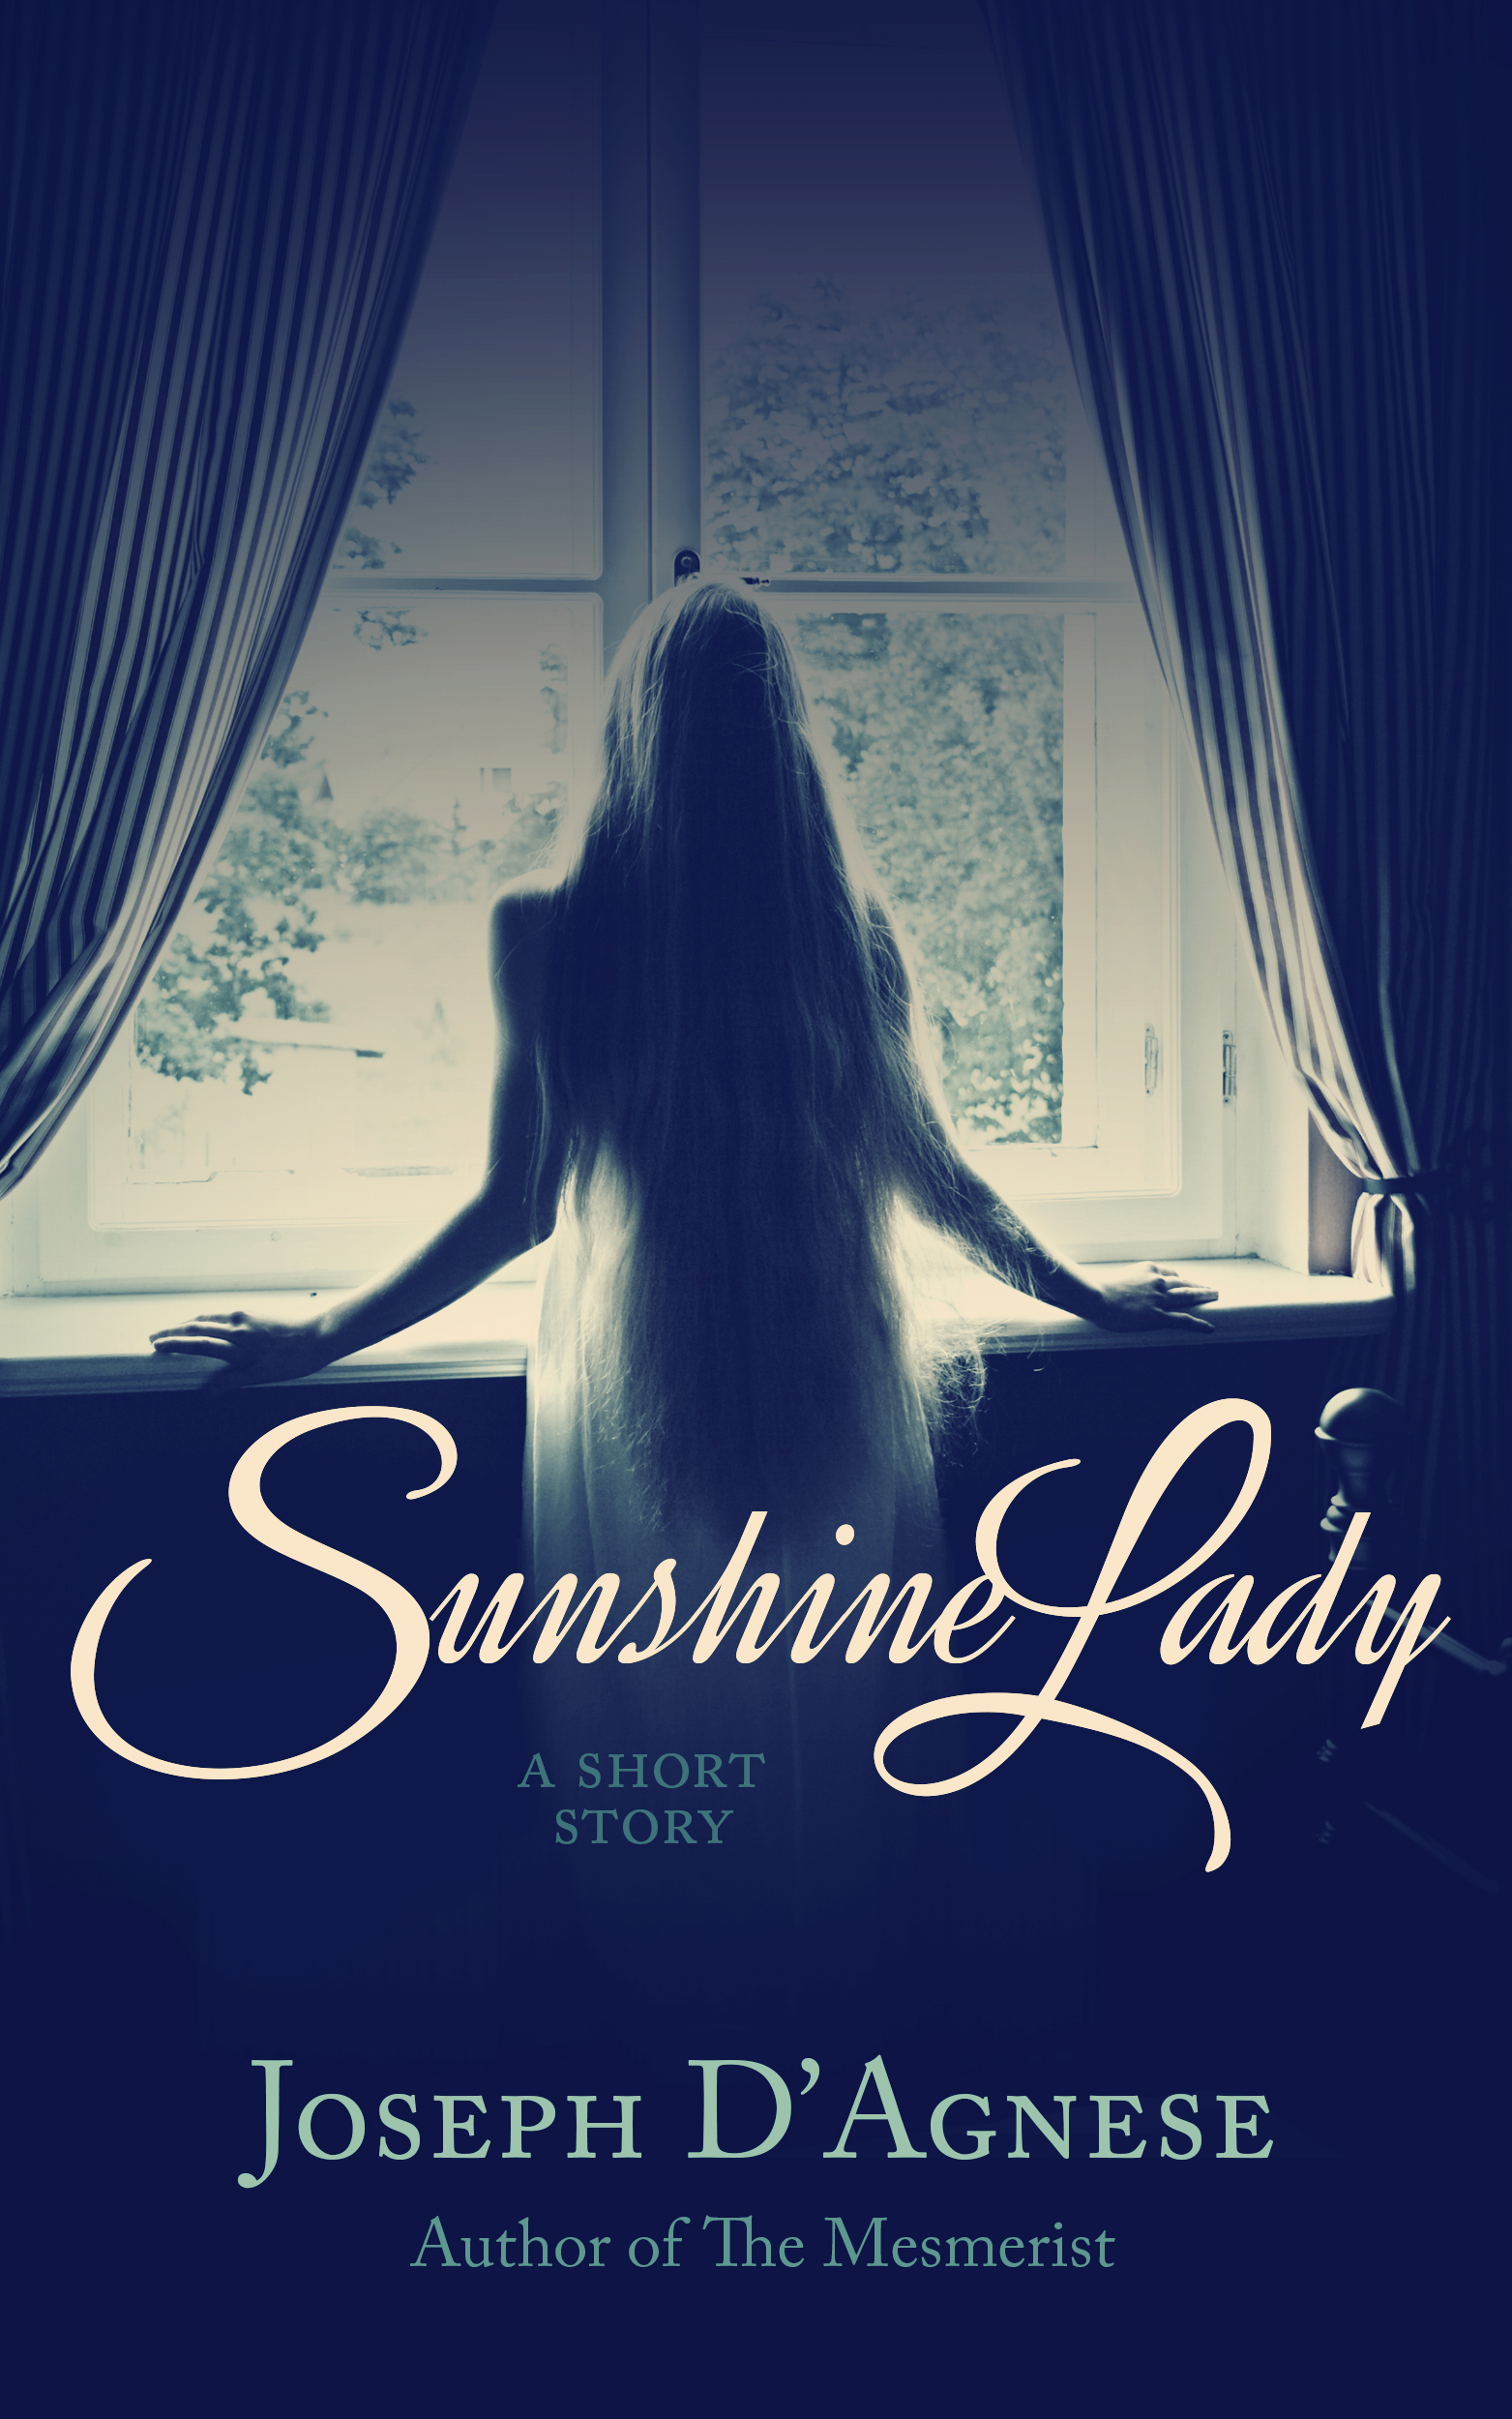 Sunshine Lady by Joseph D'Agnese